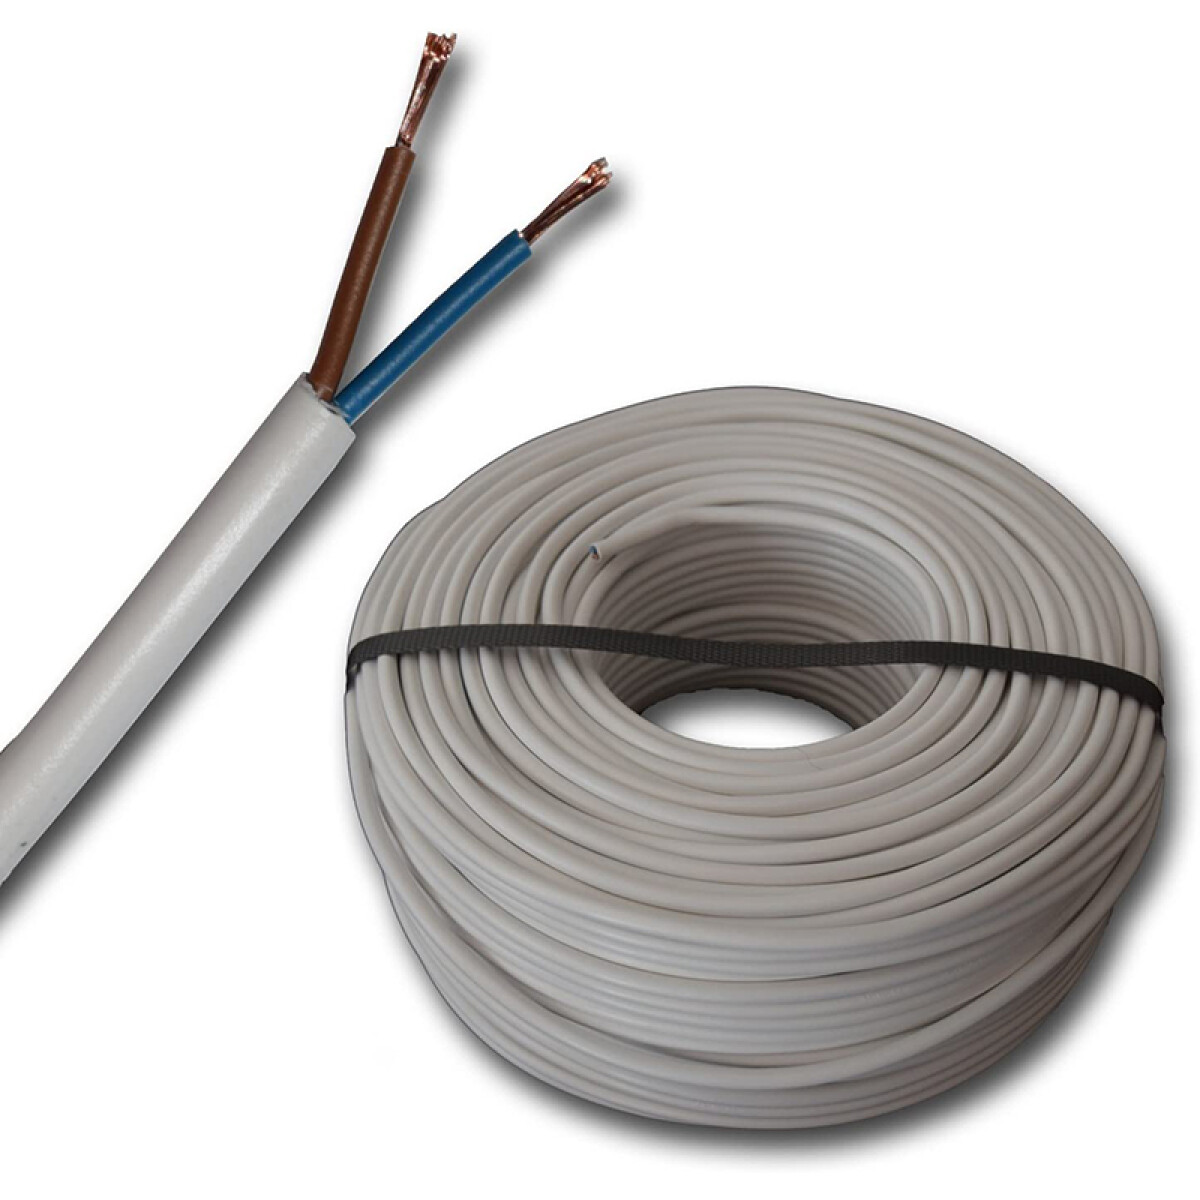 Cable bajo plástico gris 2x2mm² - Rollo 100 mts. - N04304 